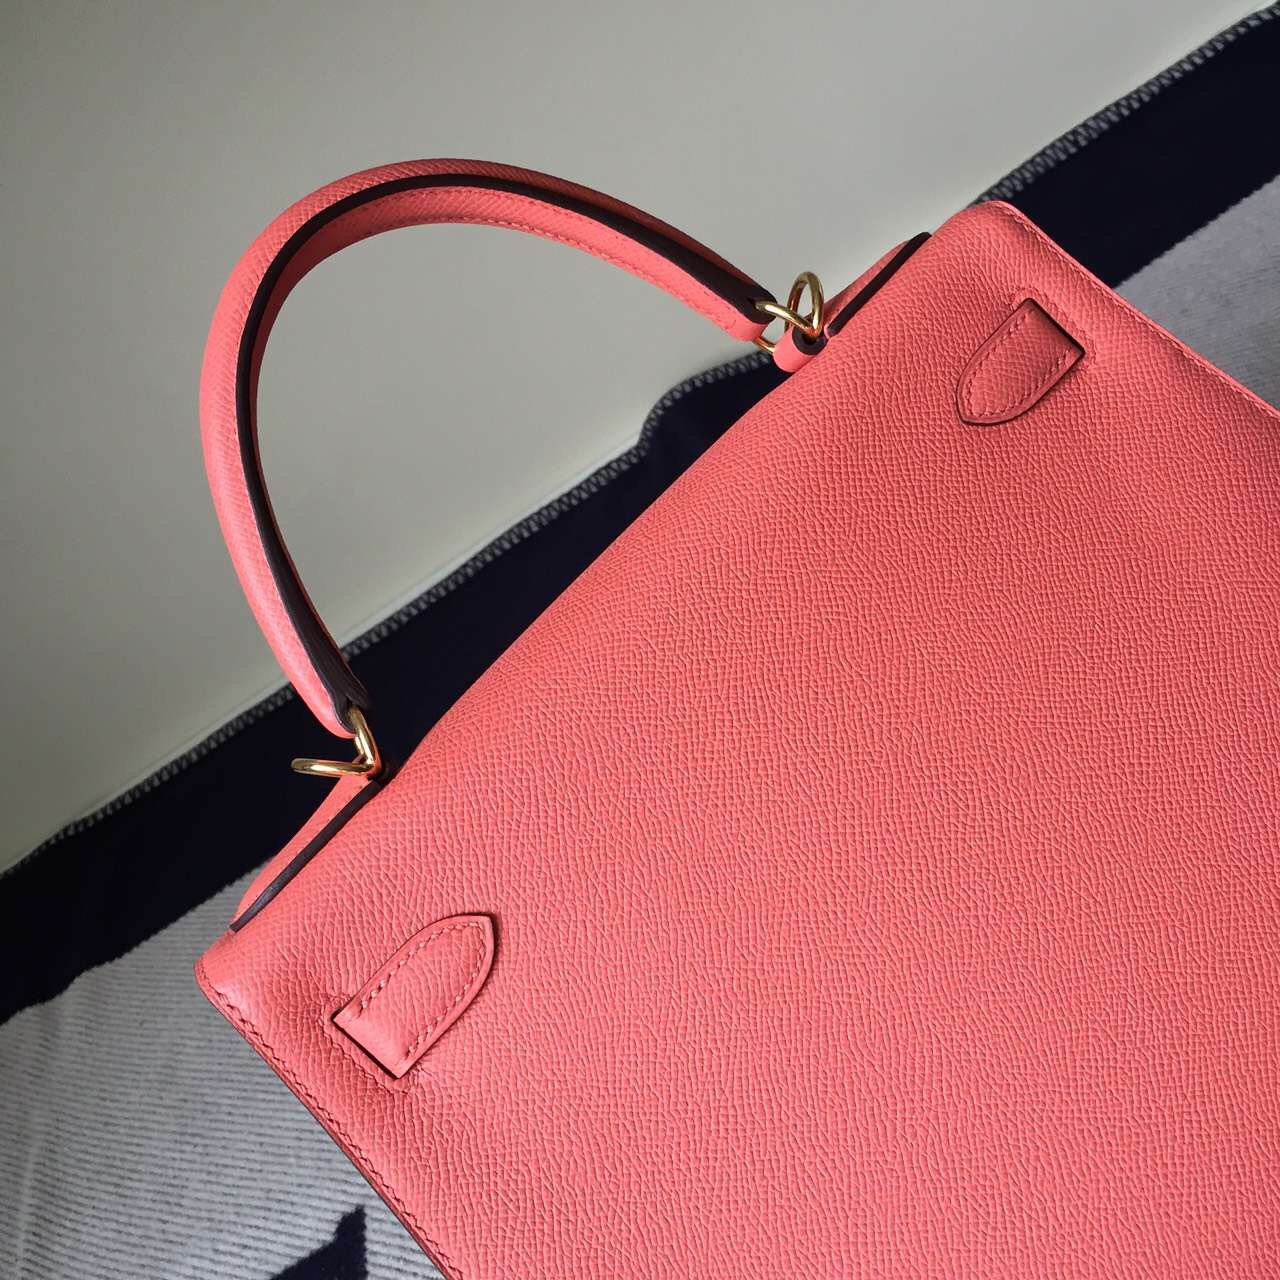 Discount Hermes I5 Flamingo Epsom Leather Sellier Kelly Bag 28cm